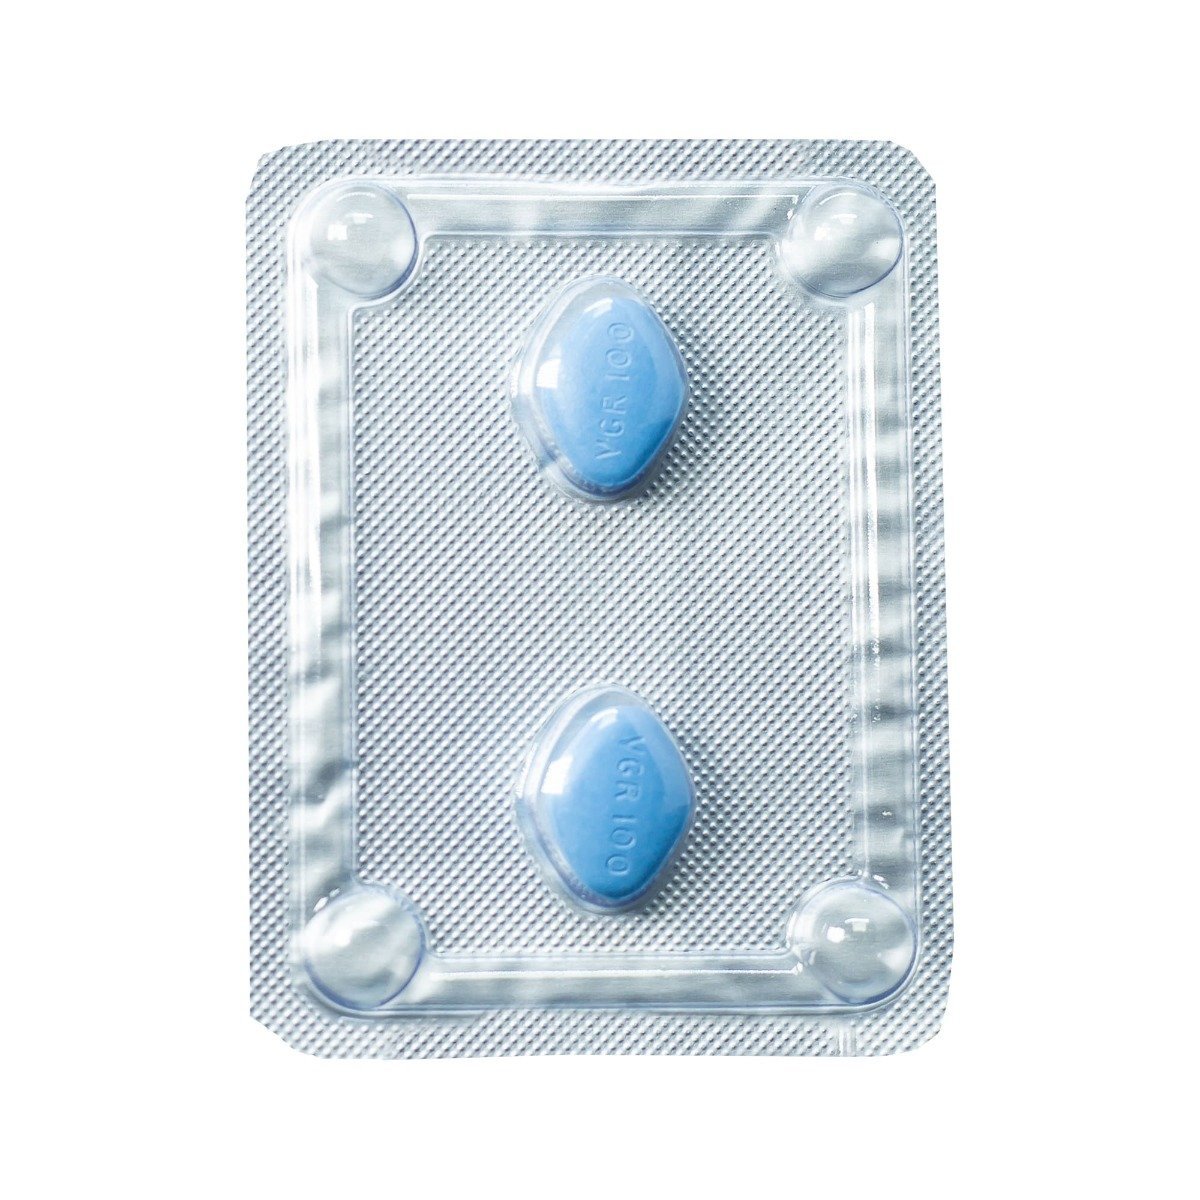 Viagra 100 mg - 4 Tablets - Bloom Pharmacy